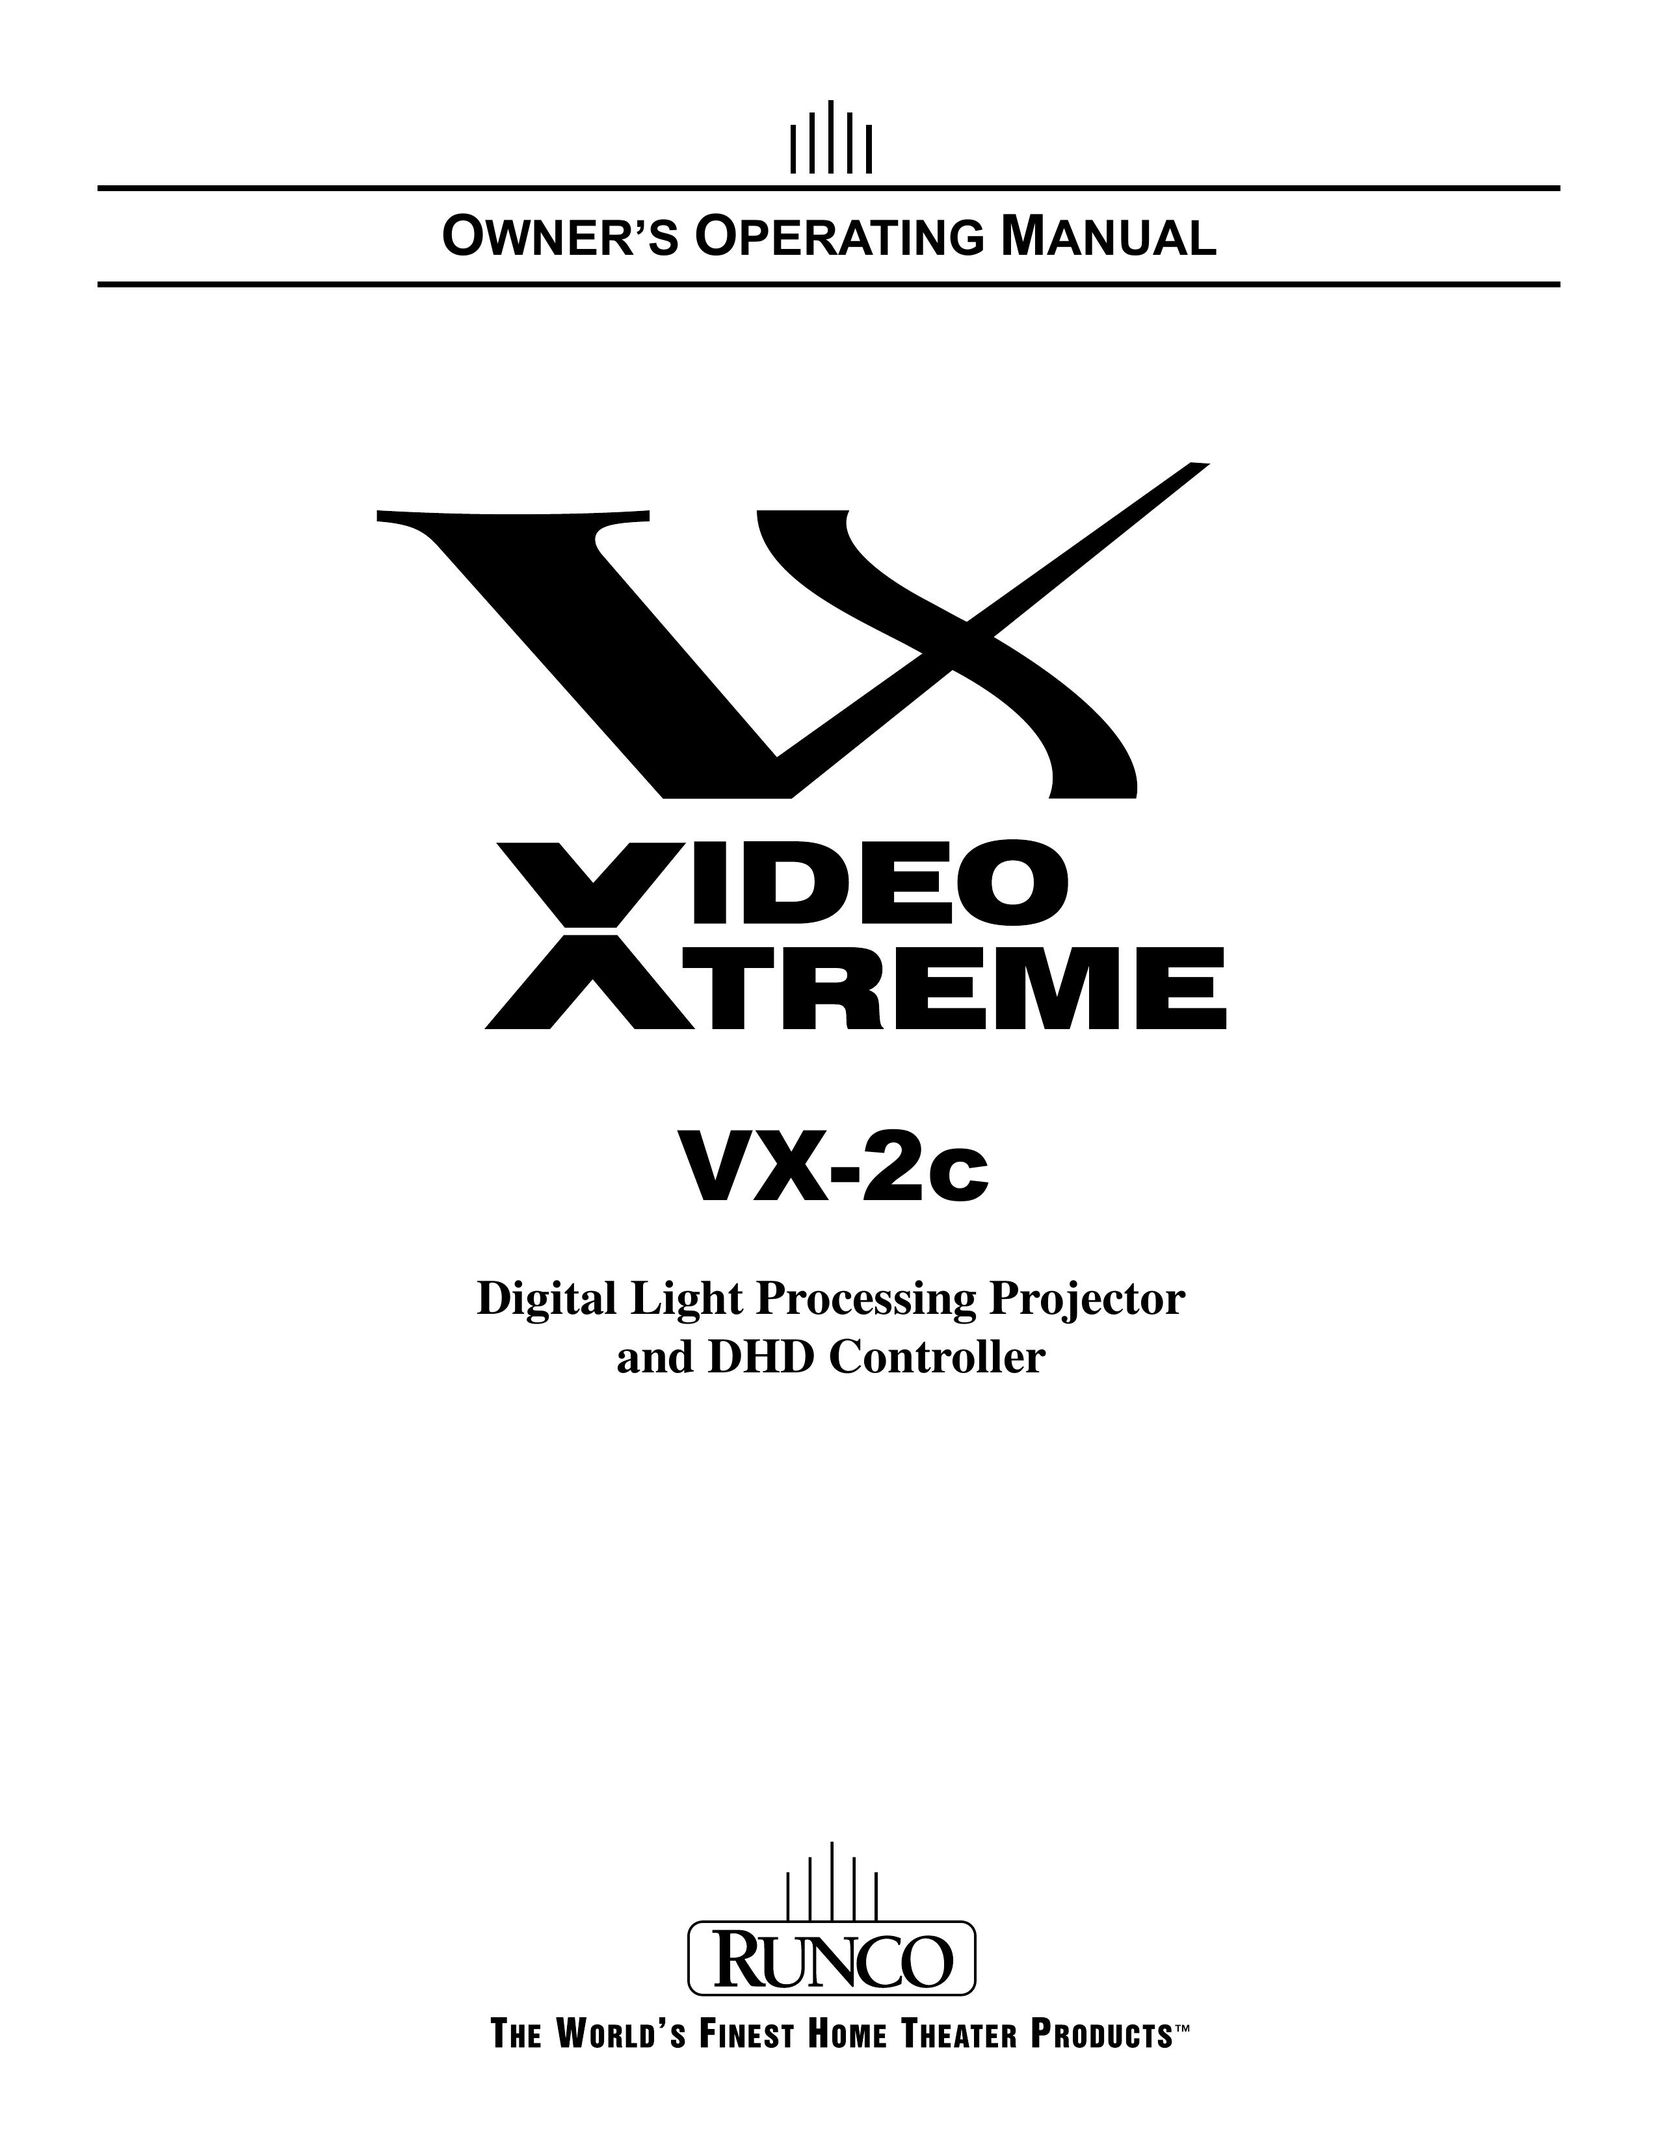 Runco VX-2c Projection Television User Manual